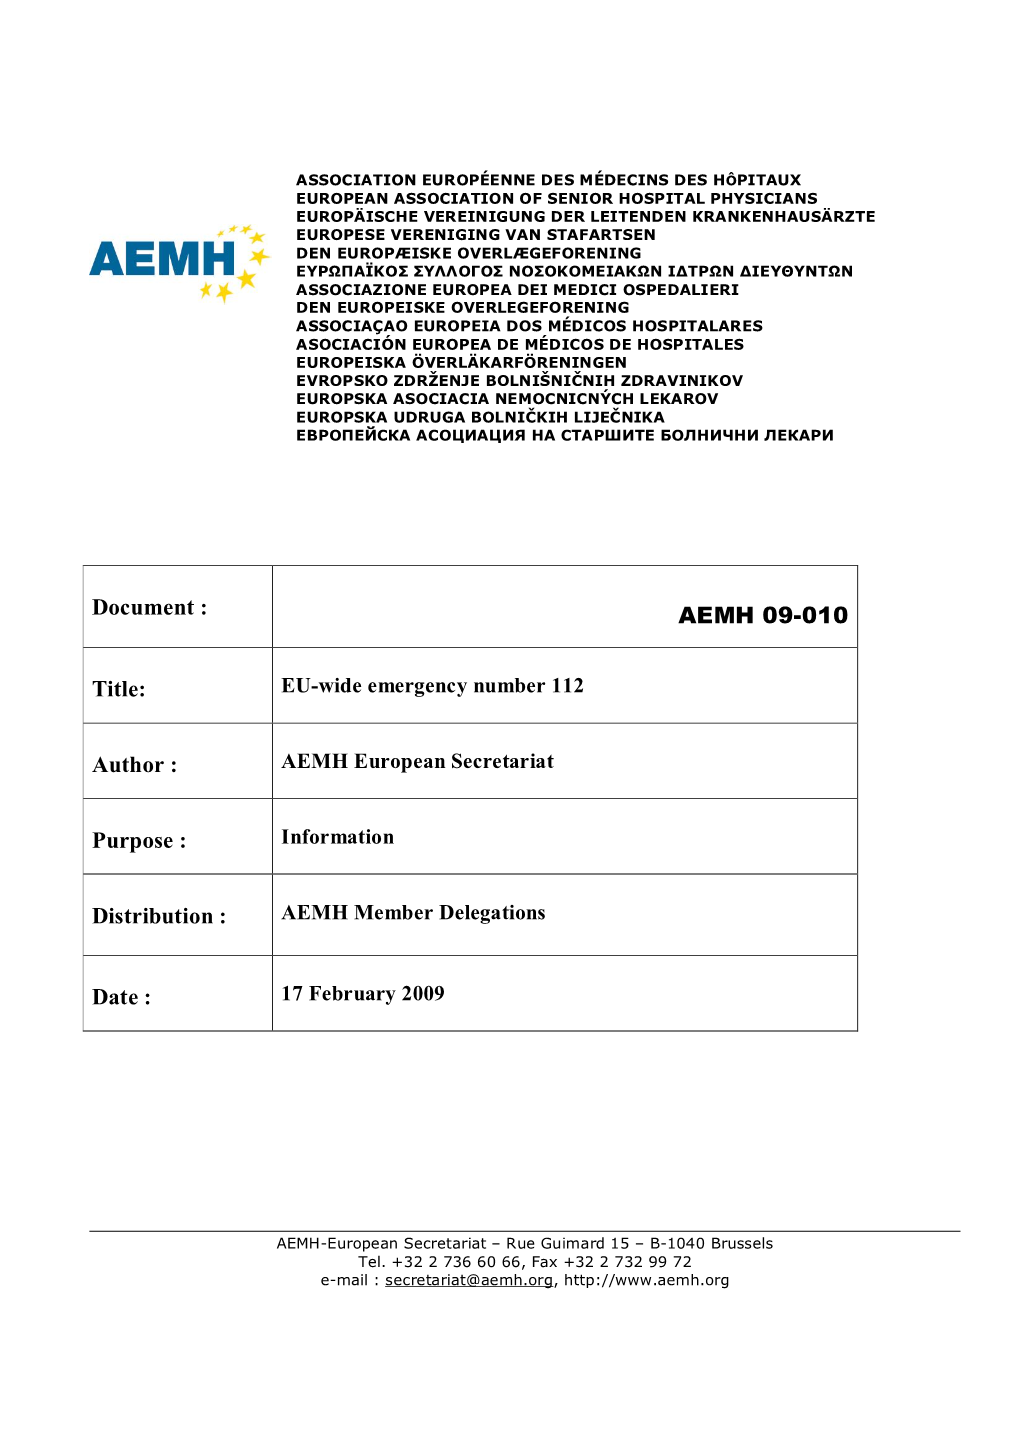 AEMH 09-010 EU-Wide Emergency Nr